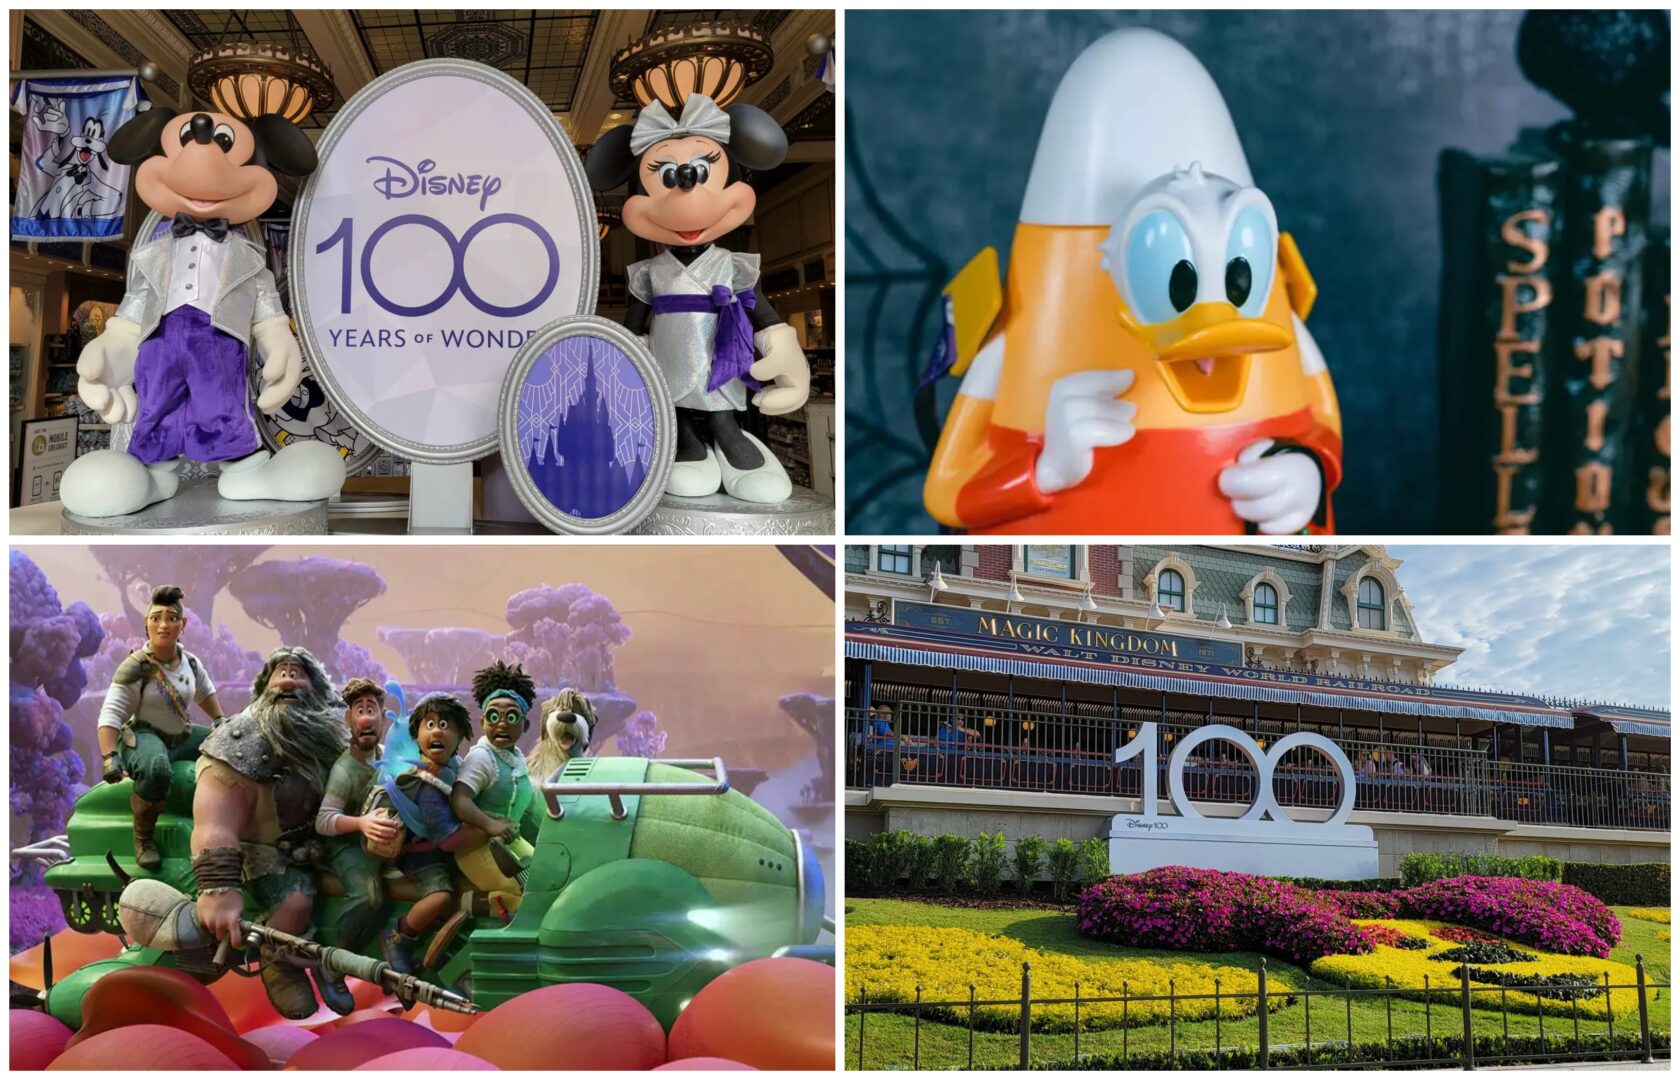 Disney News Highlights: Disney100 Decorations at Magic Kingdom, Halfway to Halloween Foodie Guide, Disney College Program Pay Raise, Strange World Biggest Box Office Bomb of 2022